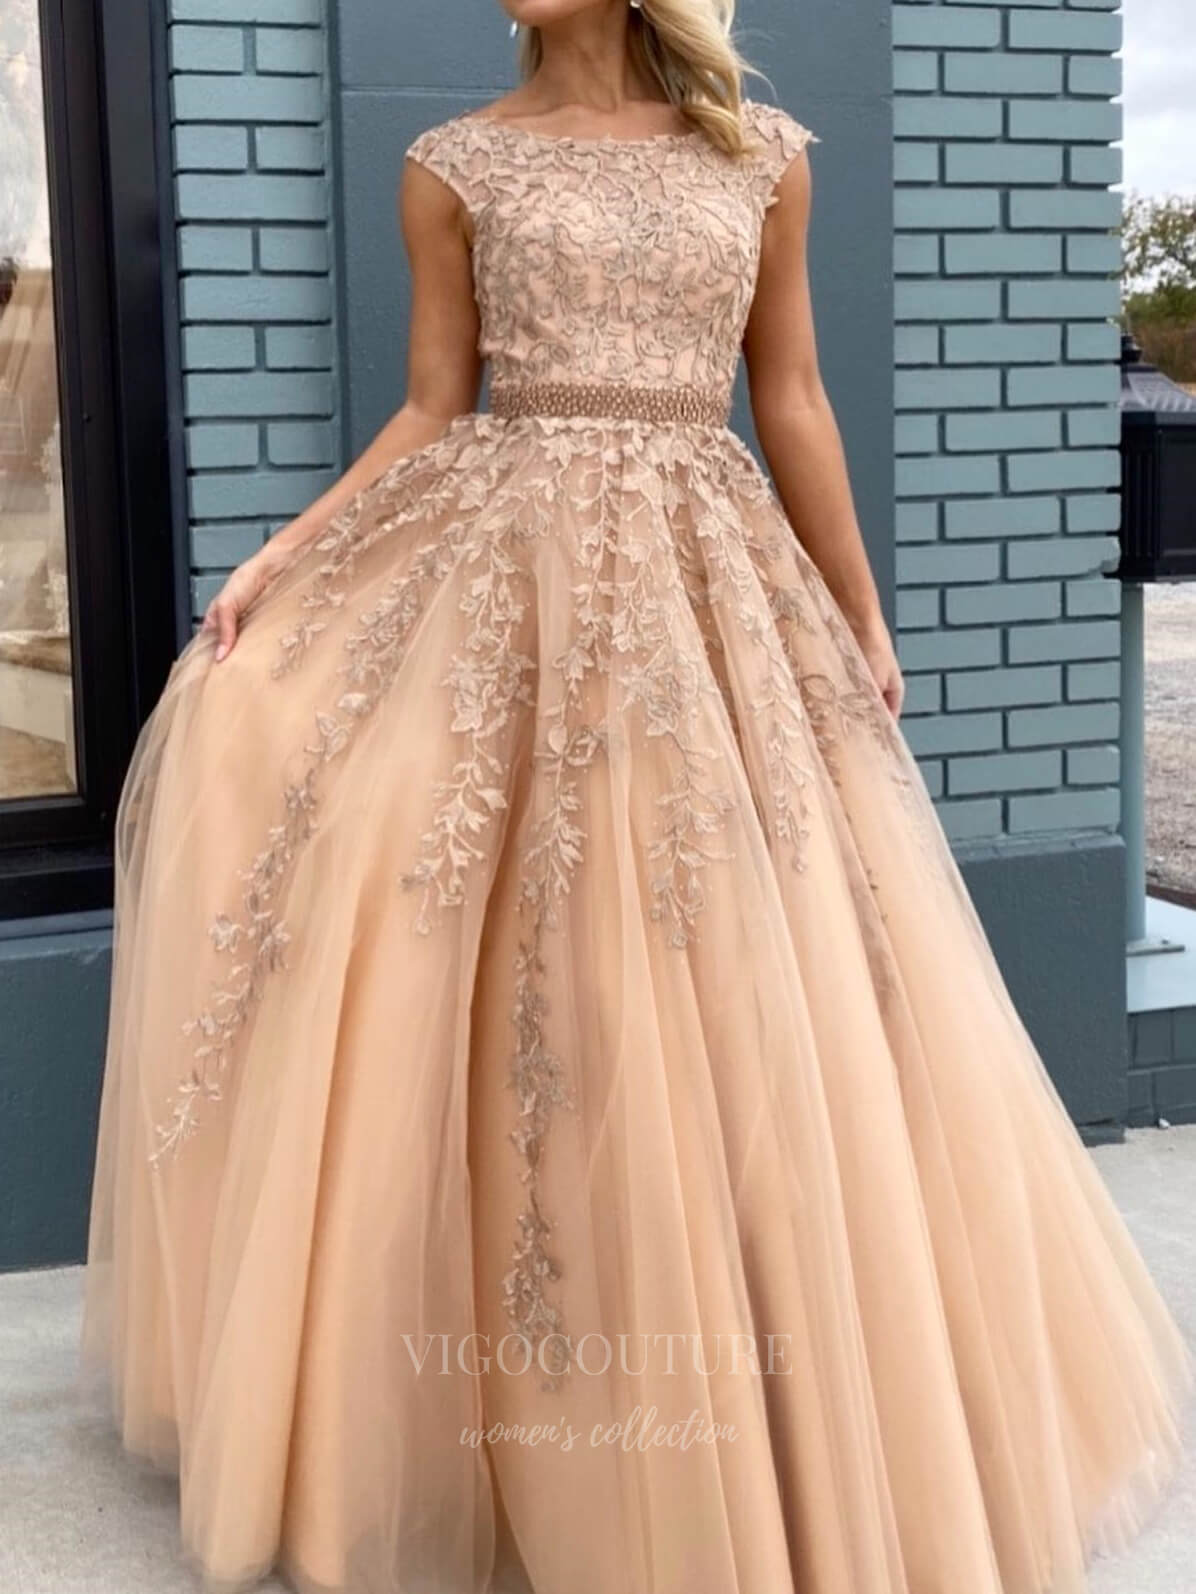 vigocouture-Khaki Lace Applique Prom Dresses A-Line Evening Dress 20928-Prom Dresses-vigocouture-Champagne-US2-